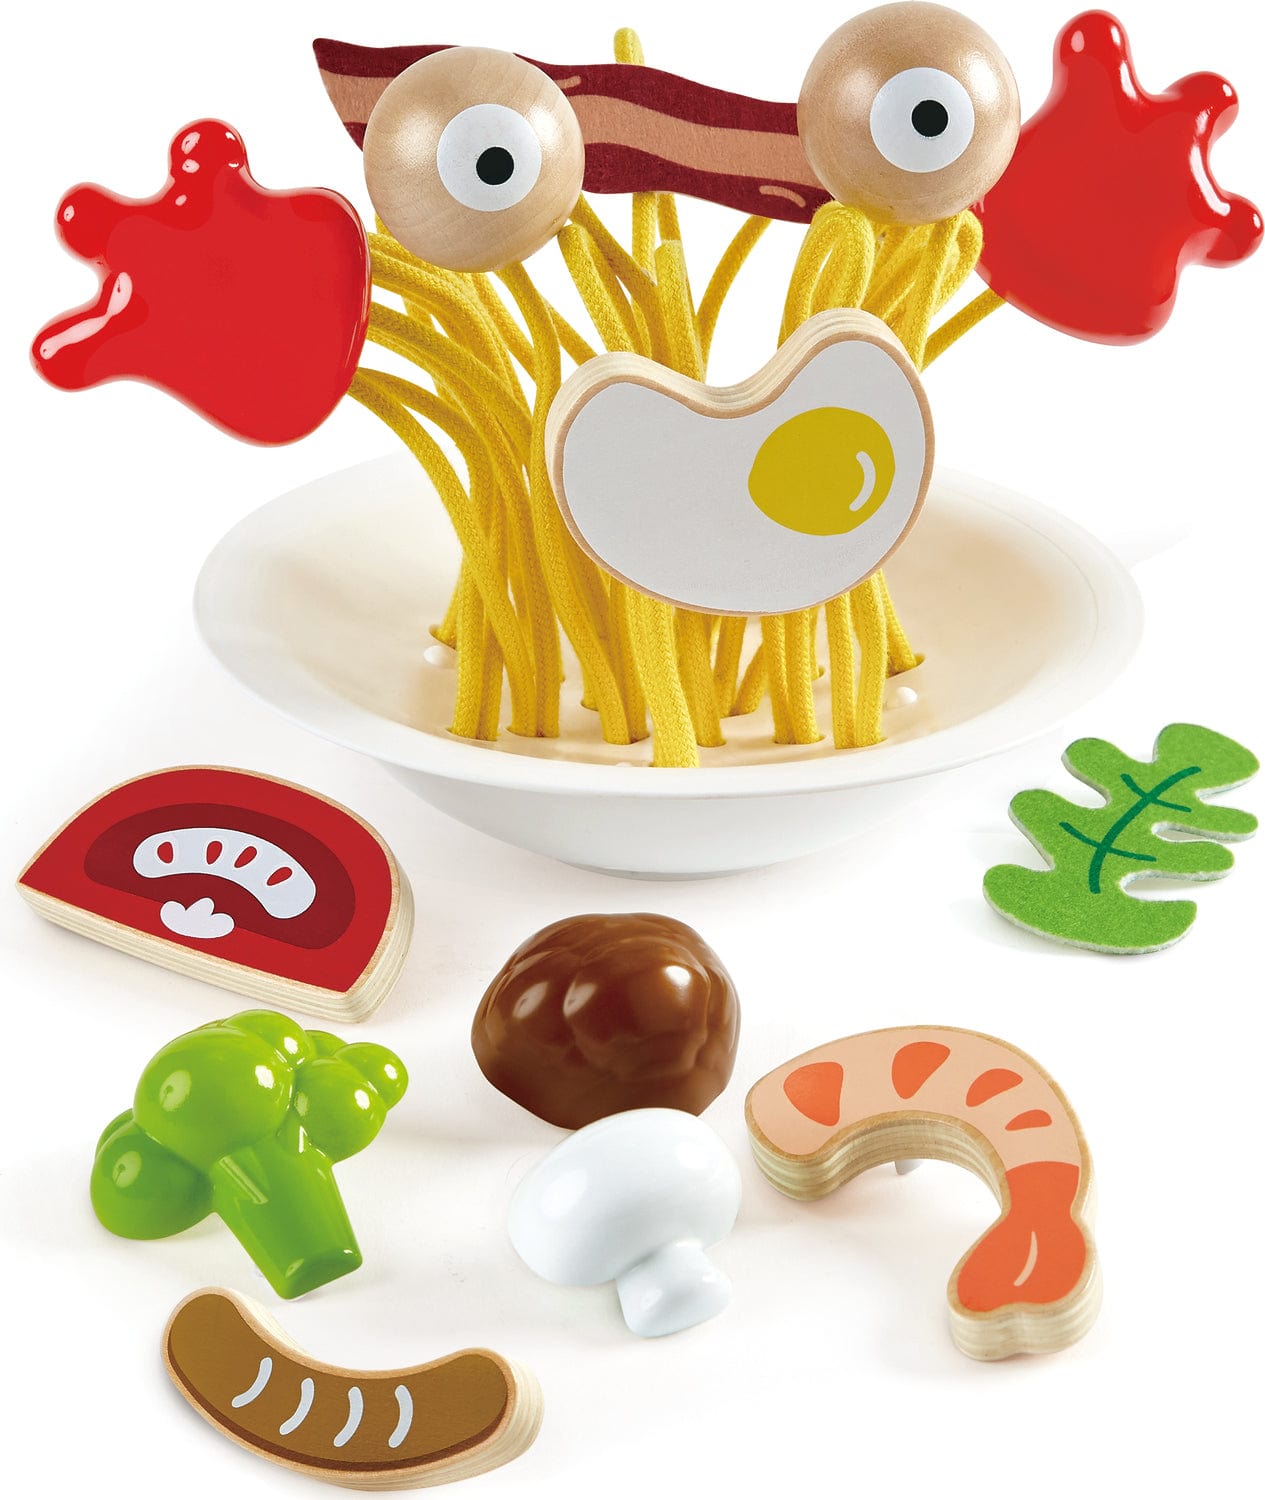 Silly Spaghetti - Saltire Games